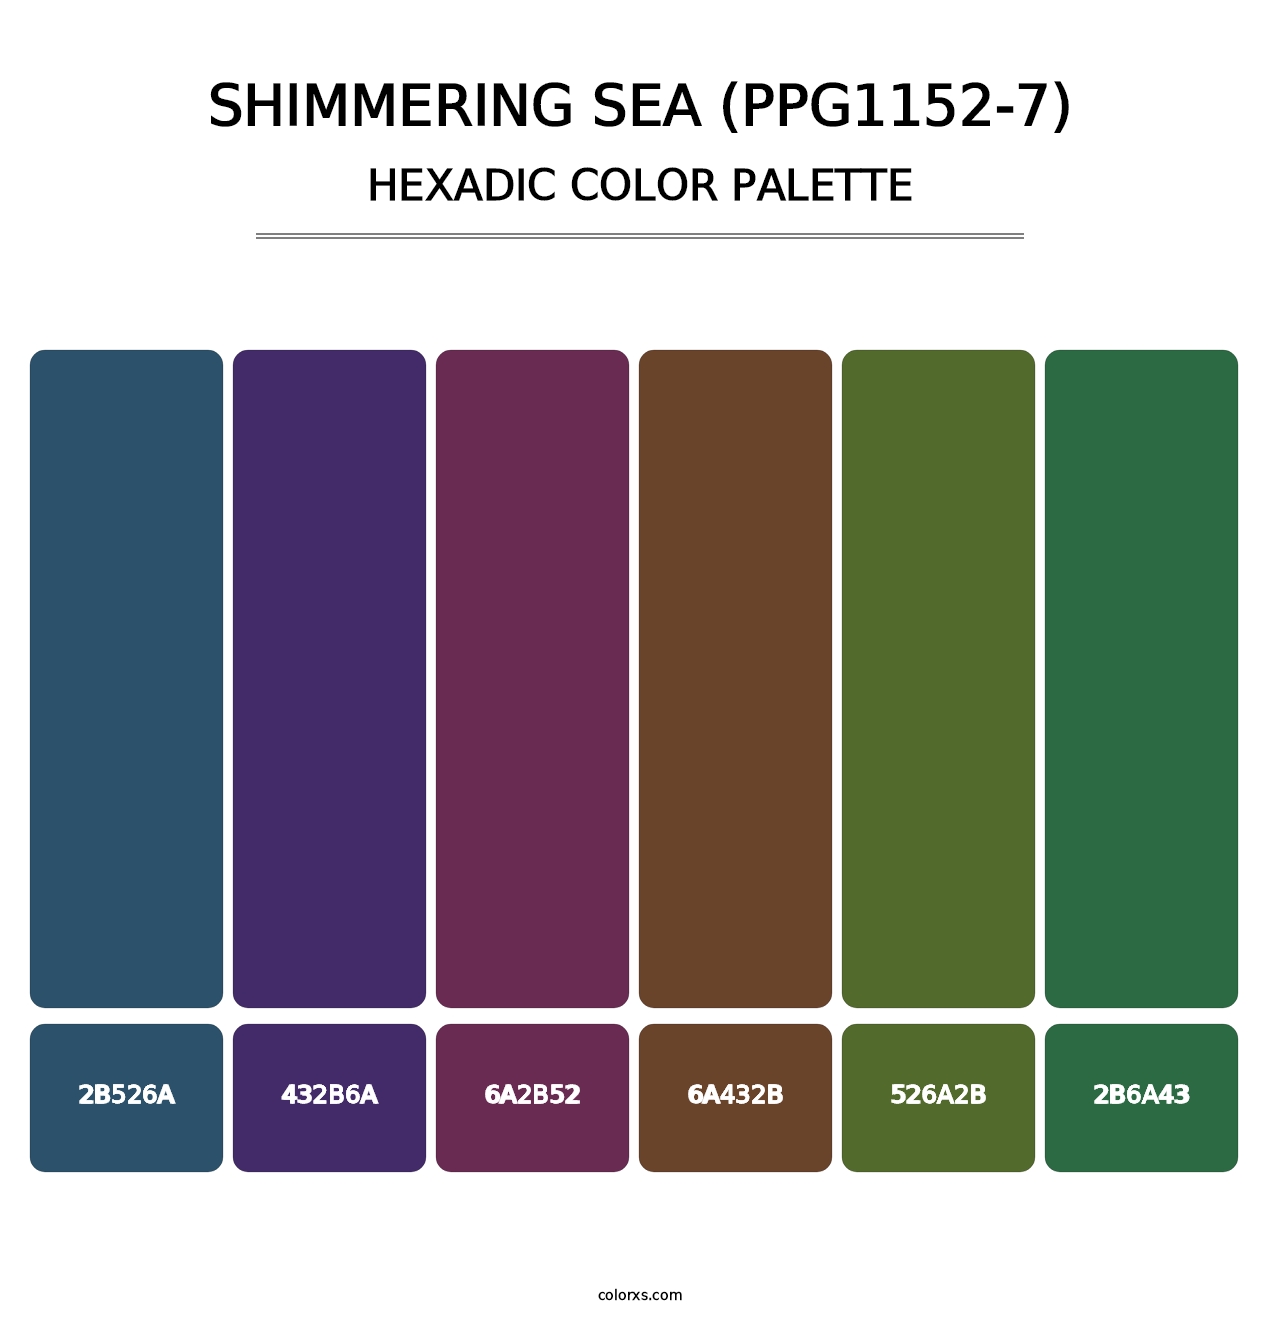 Shimmering Sea (PPG1152-7) - Hexadic Color Palette